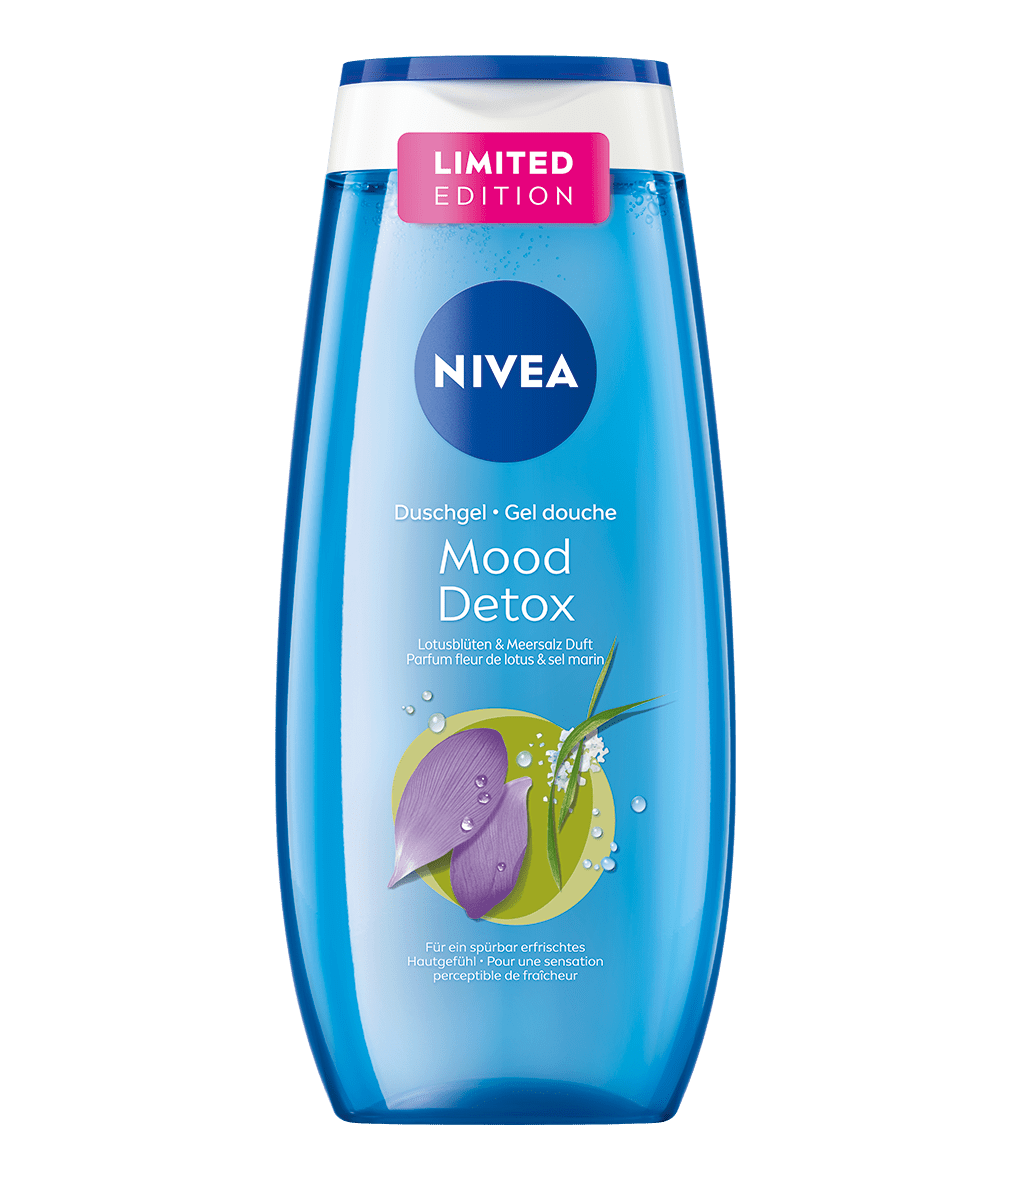 NIVEA Mood Detox Duschgel Limited Edition_250ml